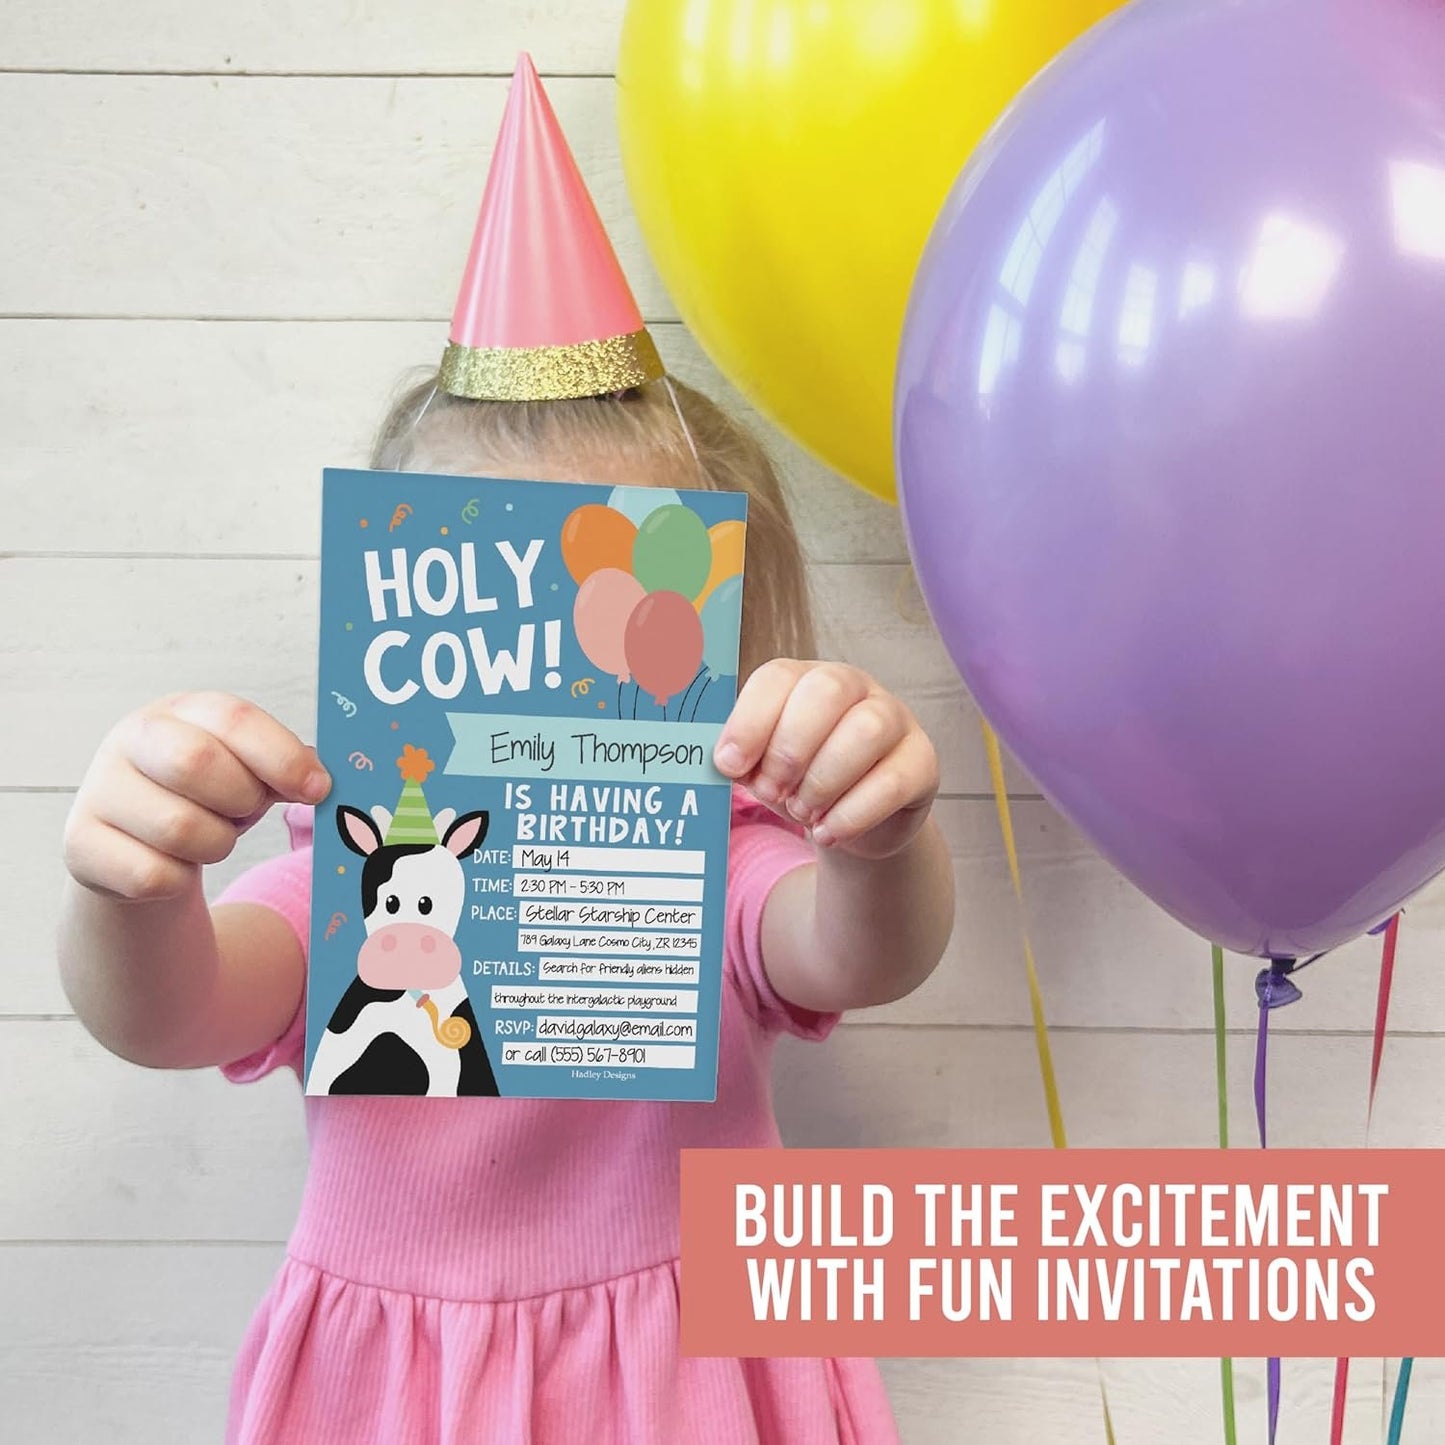 15 Holy Cow Birthday Invitations Girl - Kids Birthday Invitations Boy, Cow Invitations Birthday Party Invitations For Boys, Cow Birthday Invites For Boy, Birthday Invitation Cards, Party Invites Boy